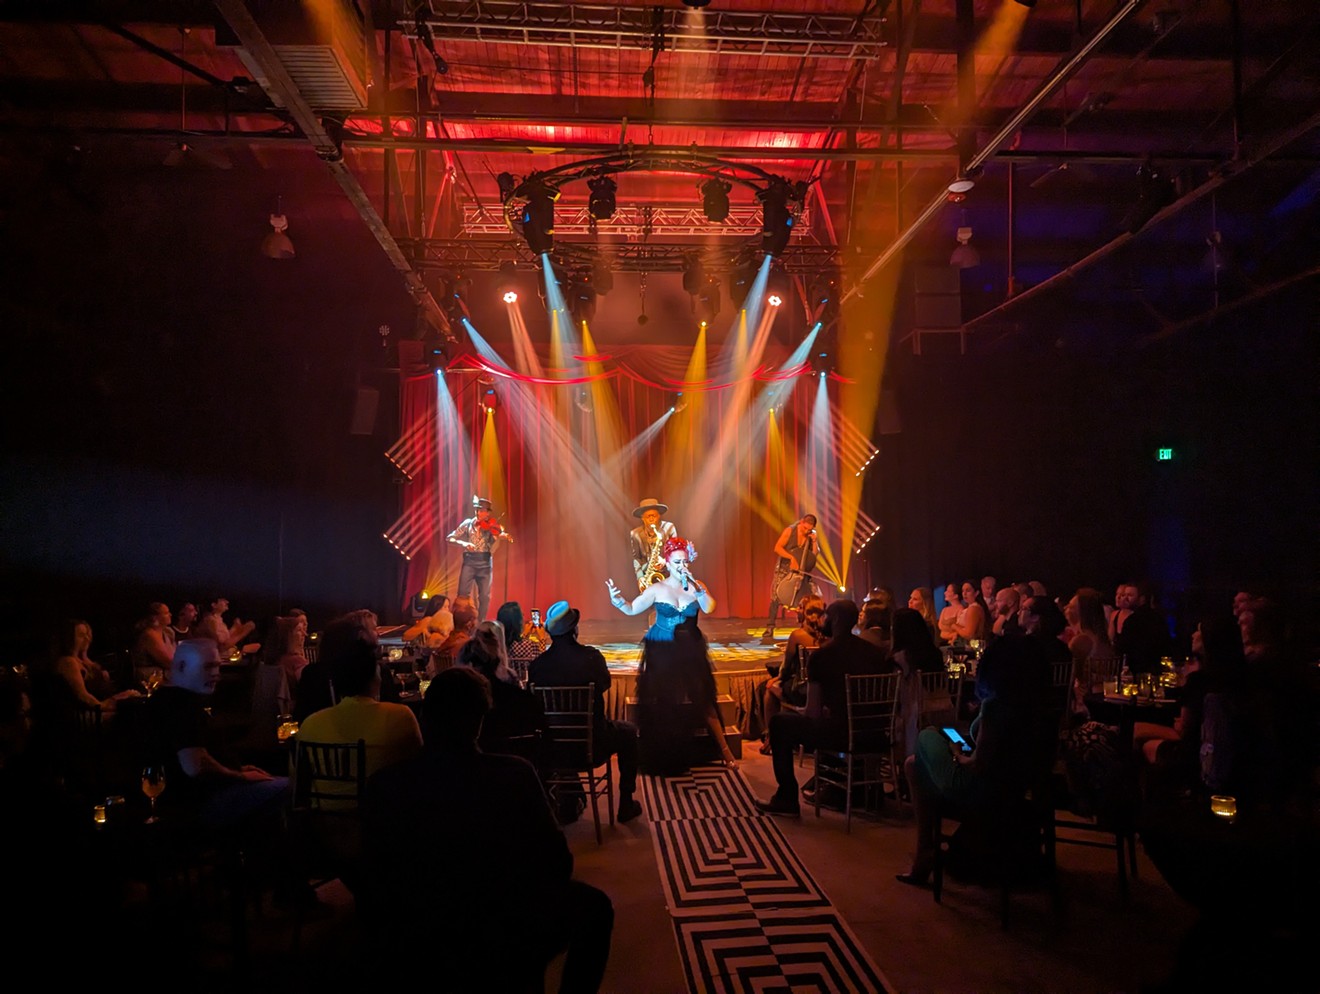 Quixotic's Sensatia Cirque Cabaret includes burlesque, aerial arts, fire performers and more in an immersive environment.